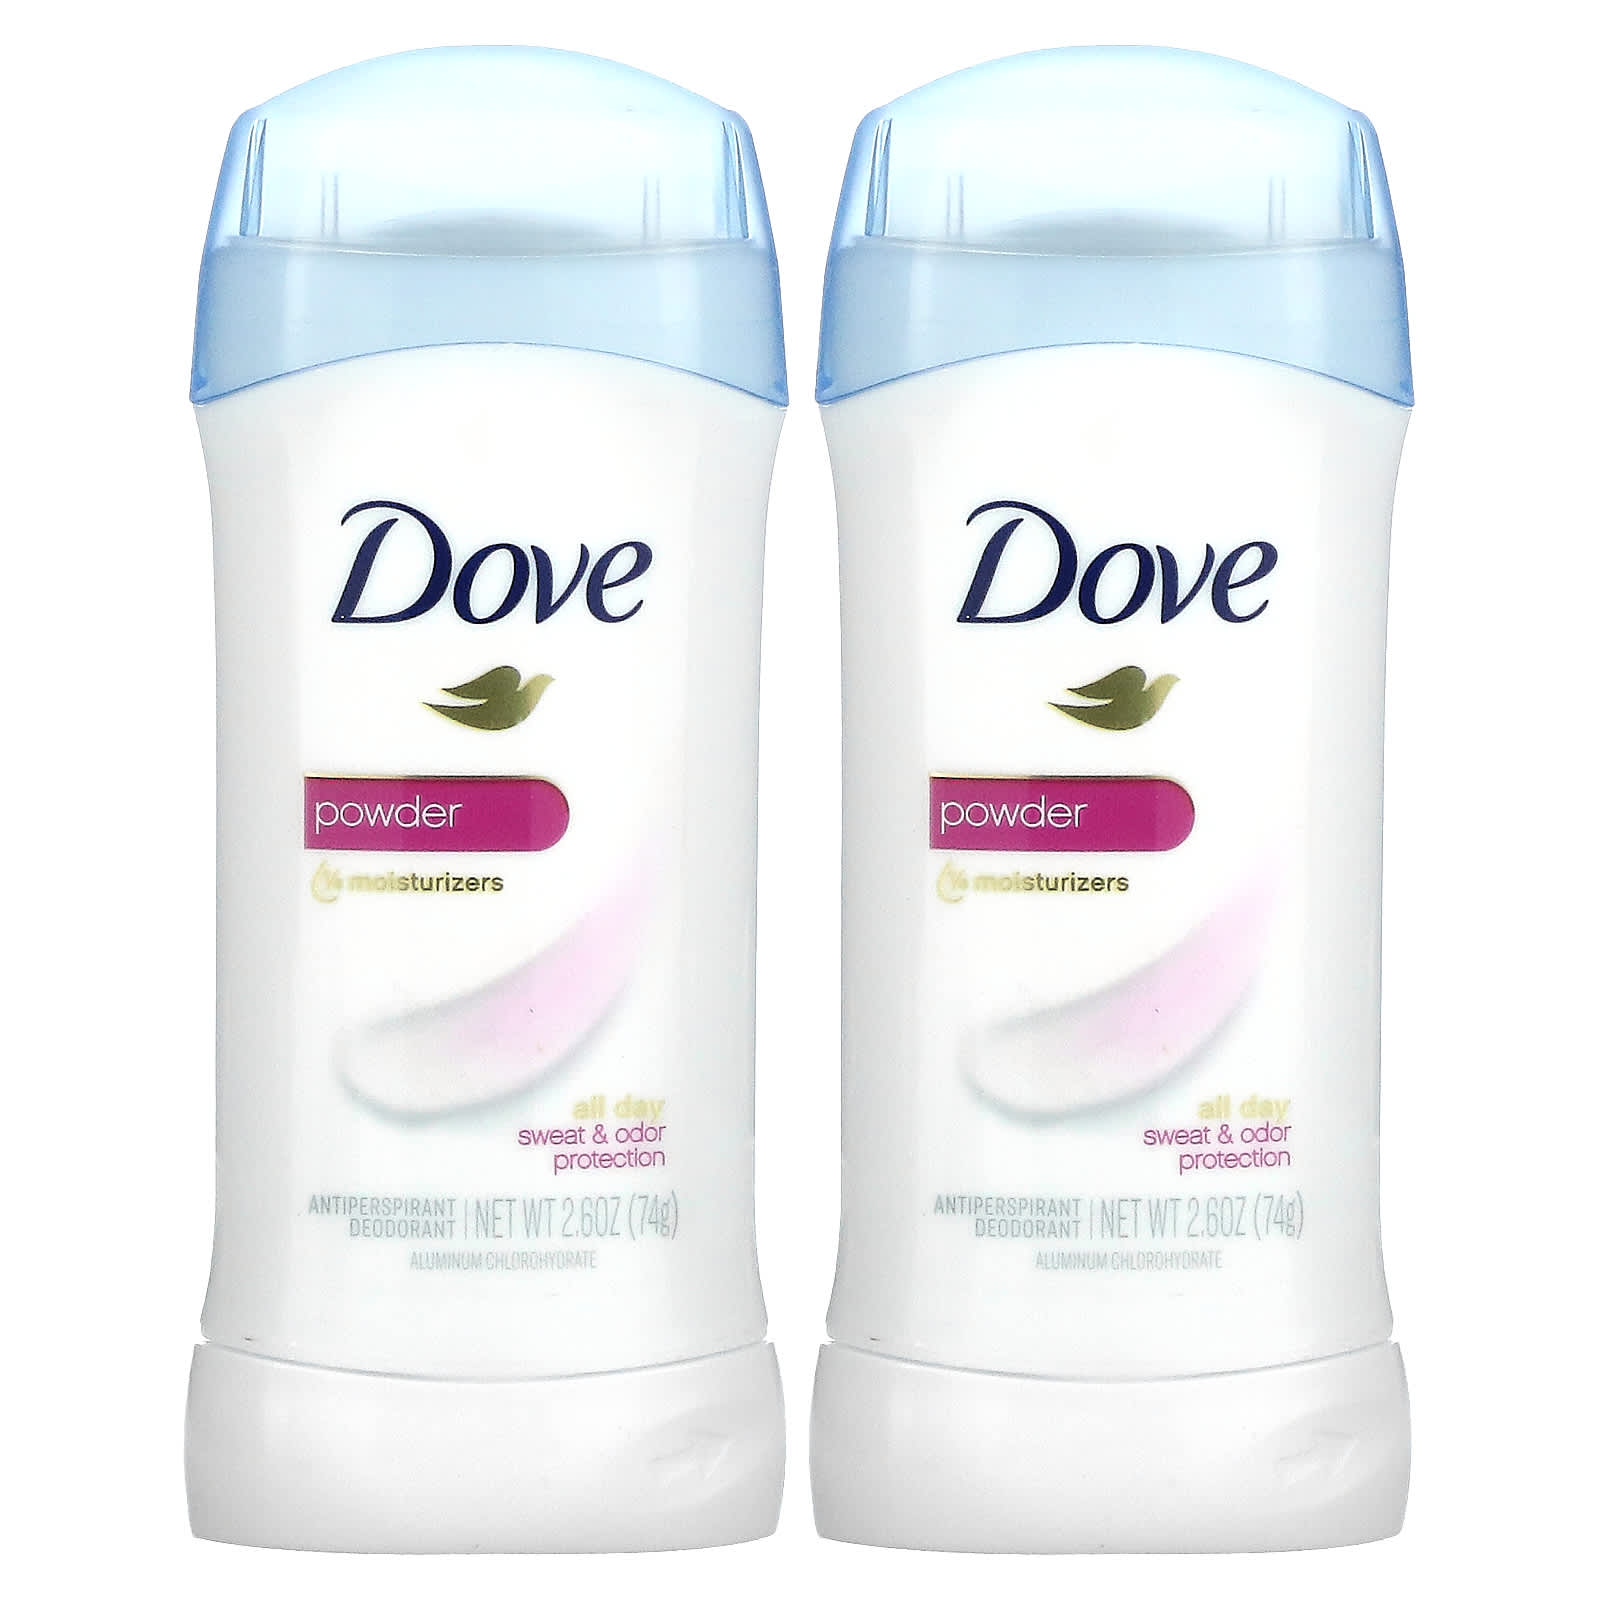 Dove, Antiperspirant Deodorant, Powder, 2.6 (74 g) Each